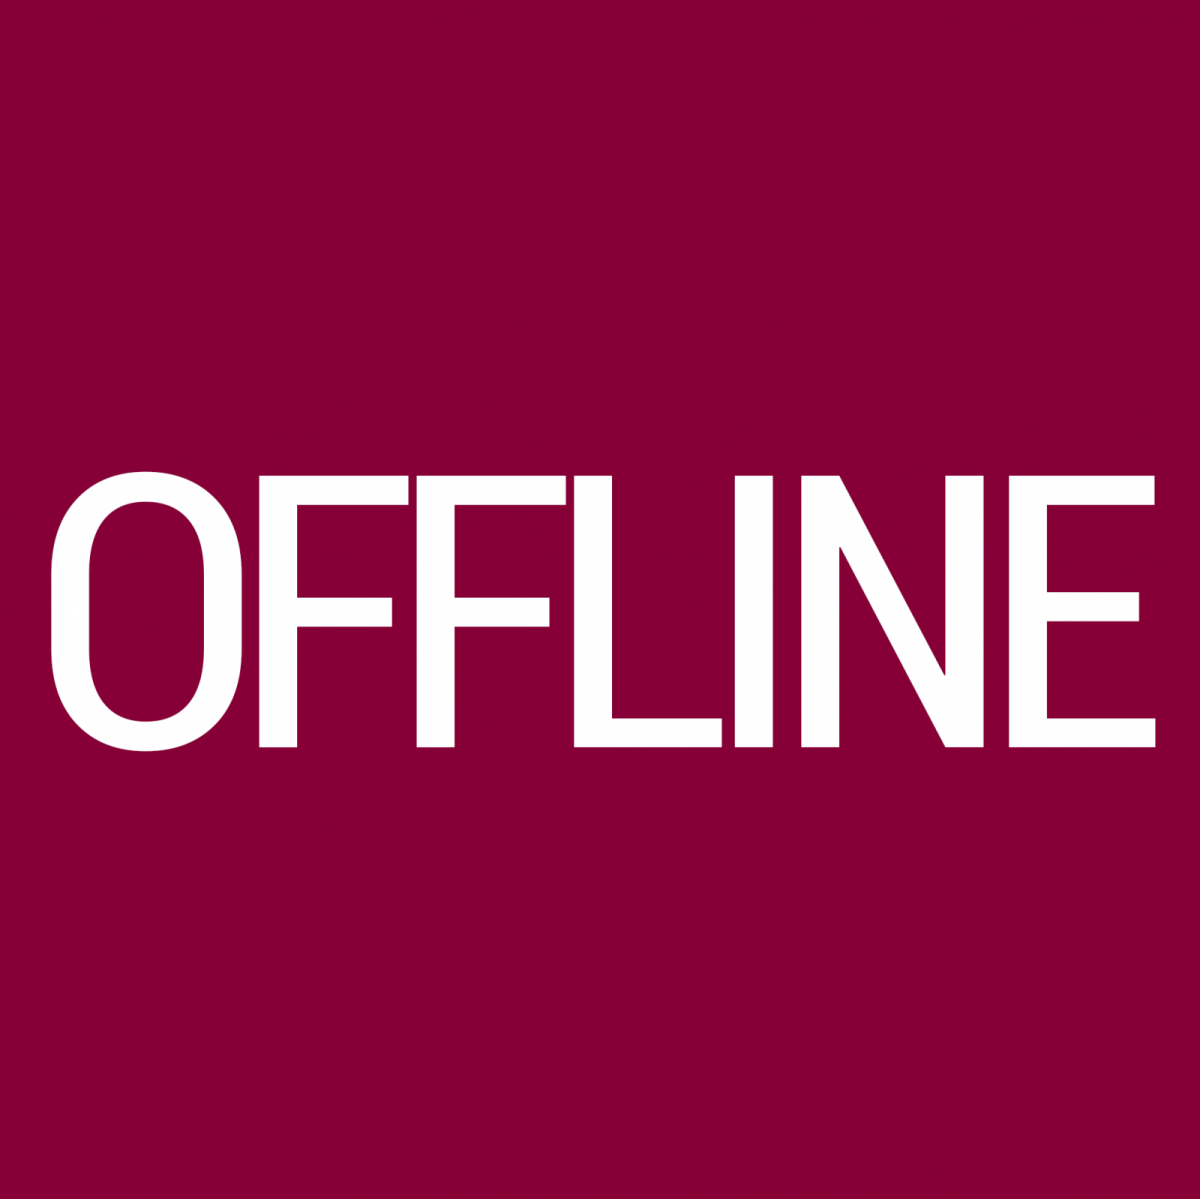 Open offline. Офлайн. Логотип offline. Надпись оффлайн. Offline логотип офлайн.